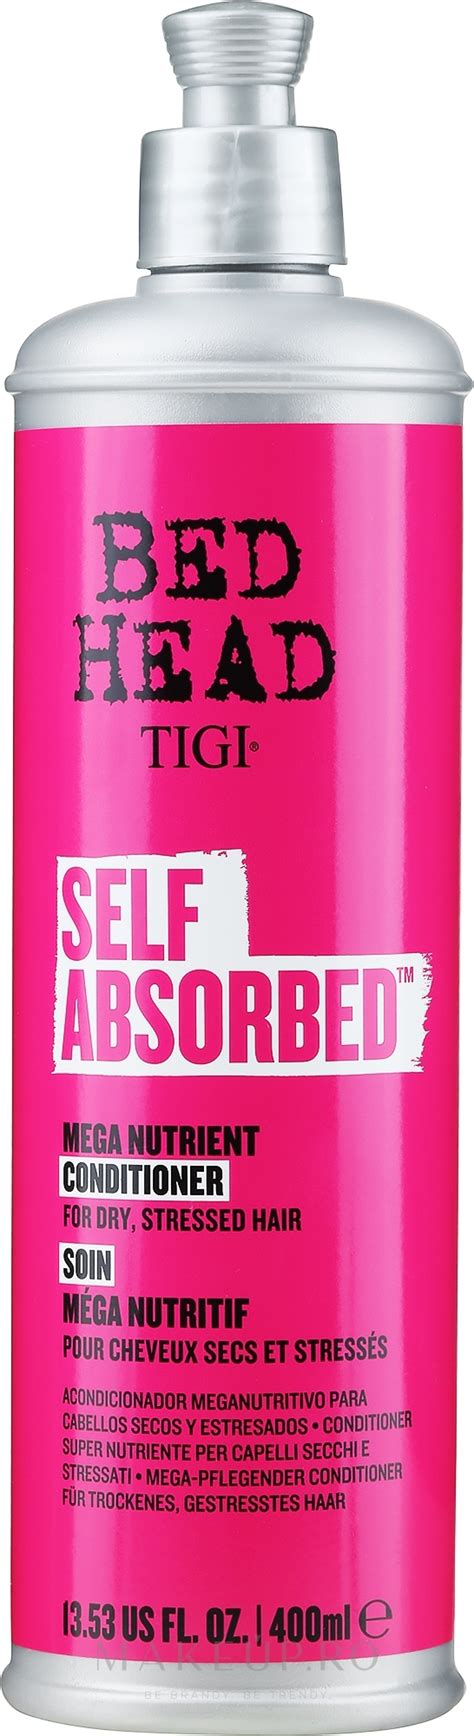 Tigi Bed Head Self Absorbed Mega Vitamin Conditioner Balsam De P R Pe